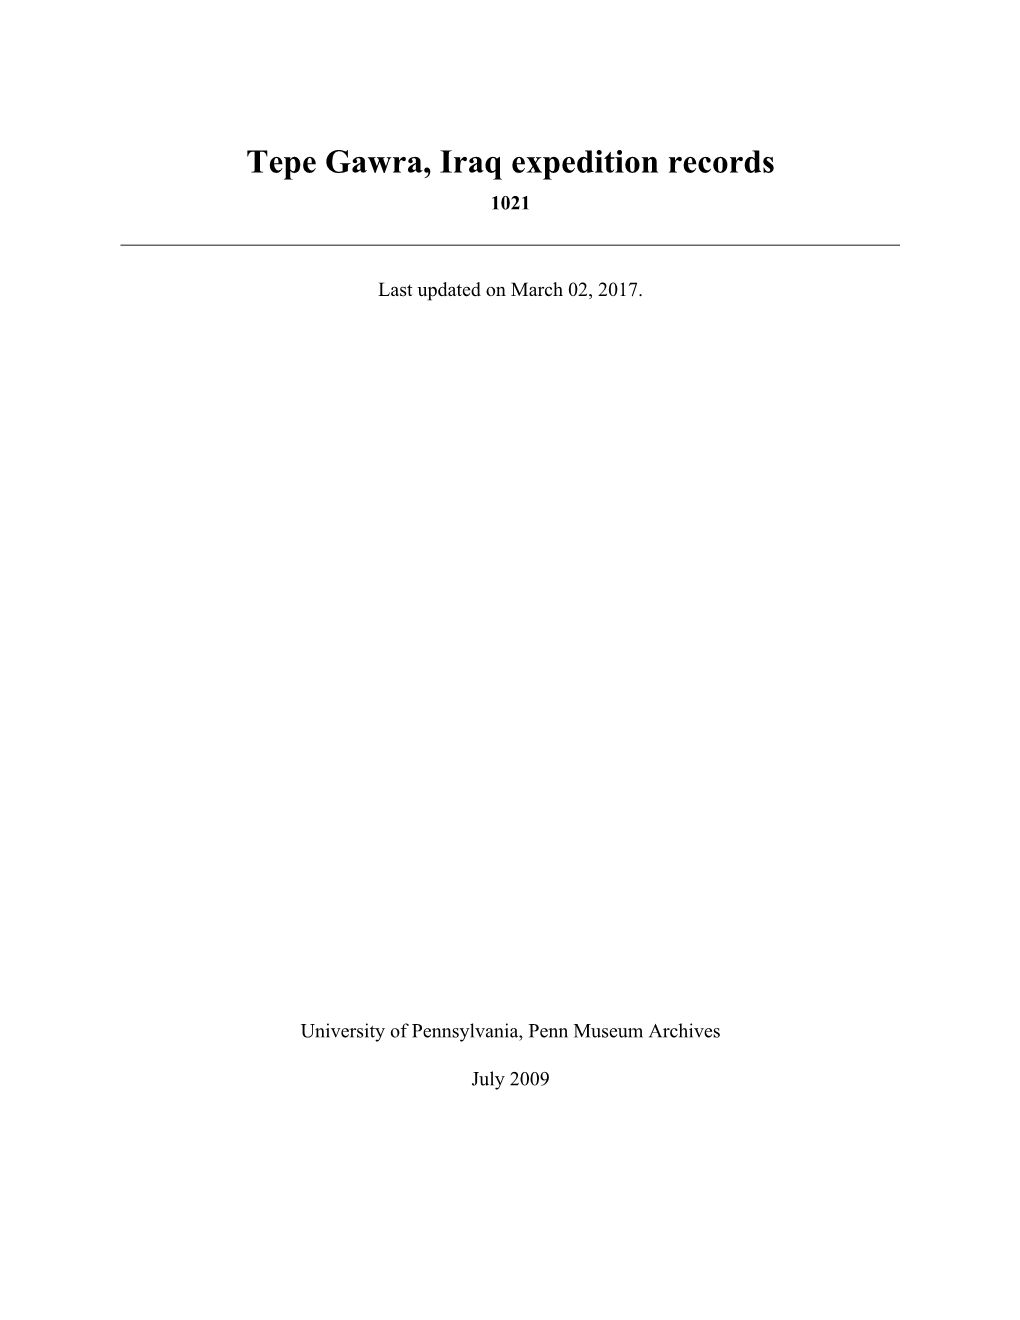 Tepe Gawra, Iraq Expedition Records 1021